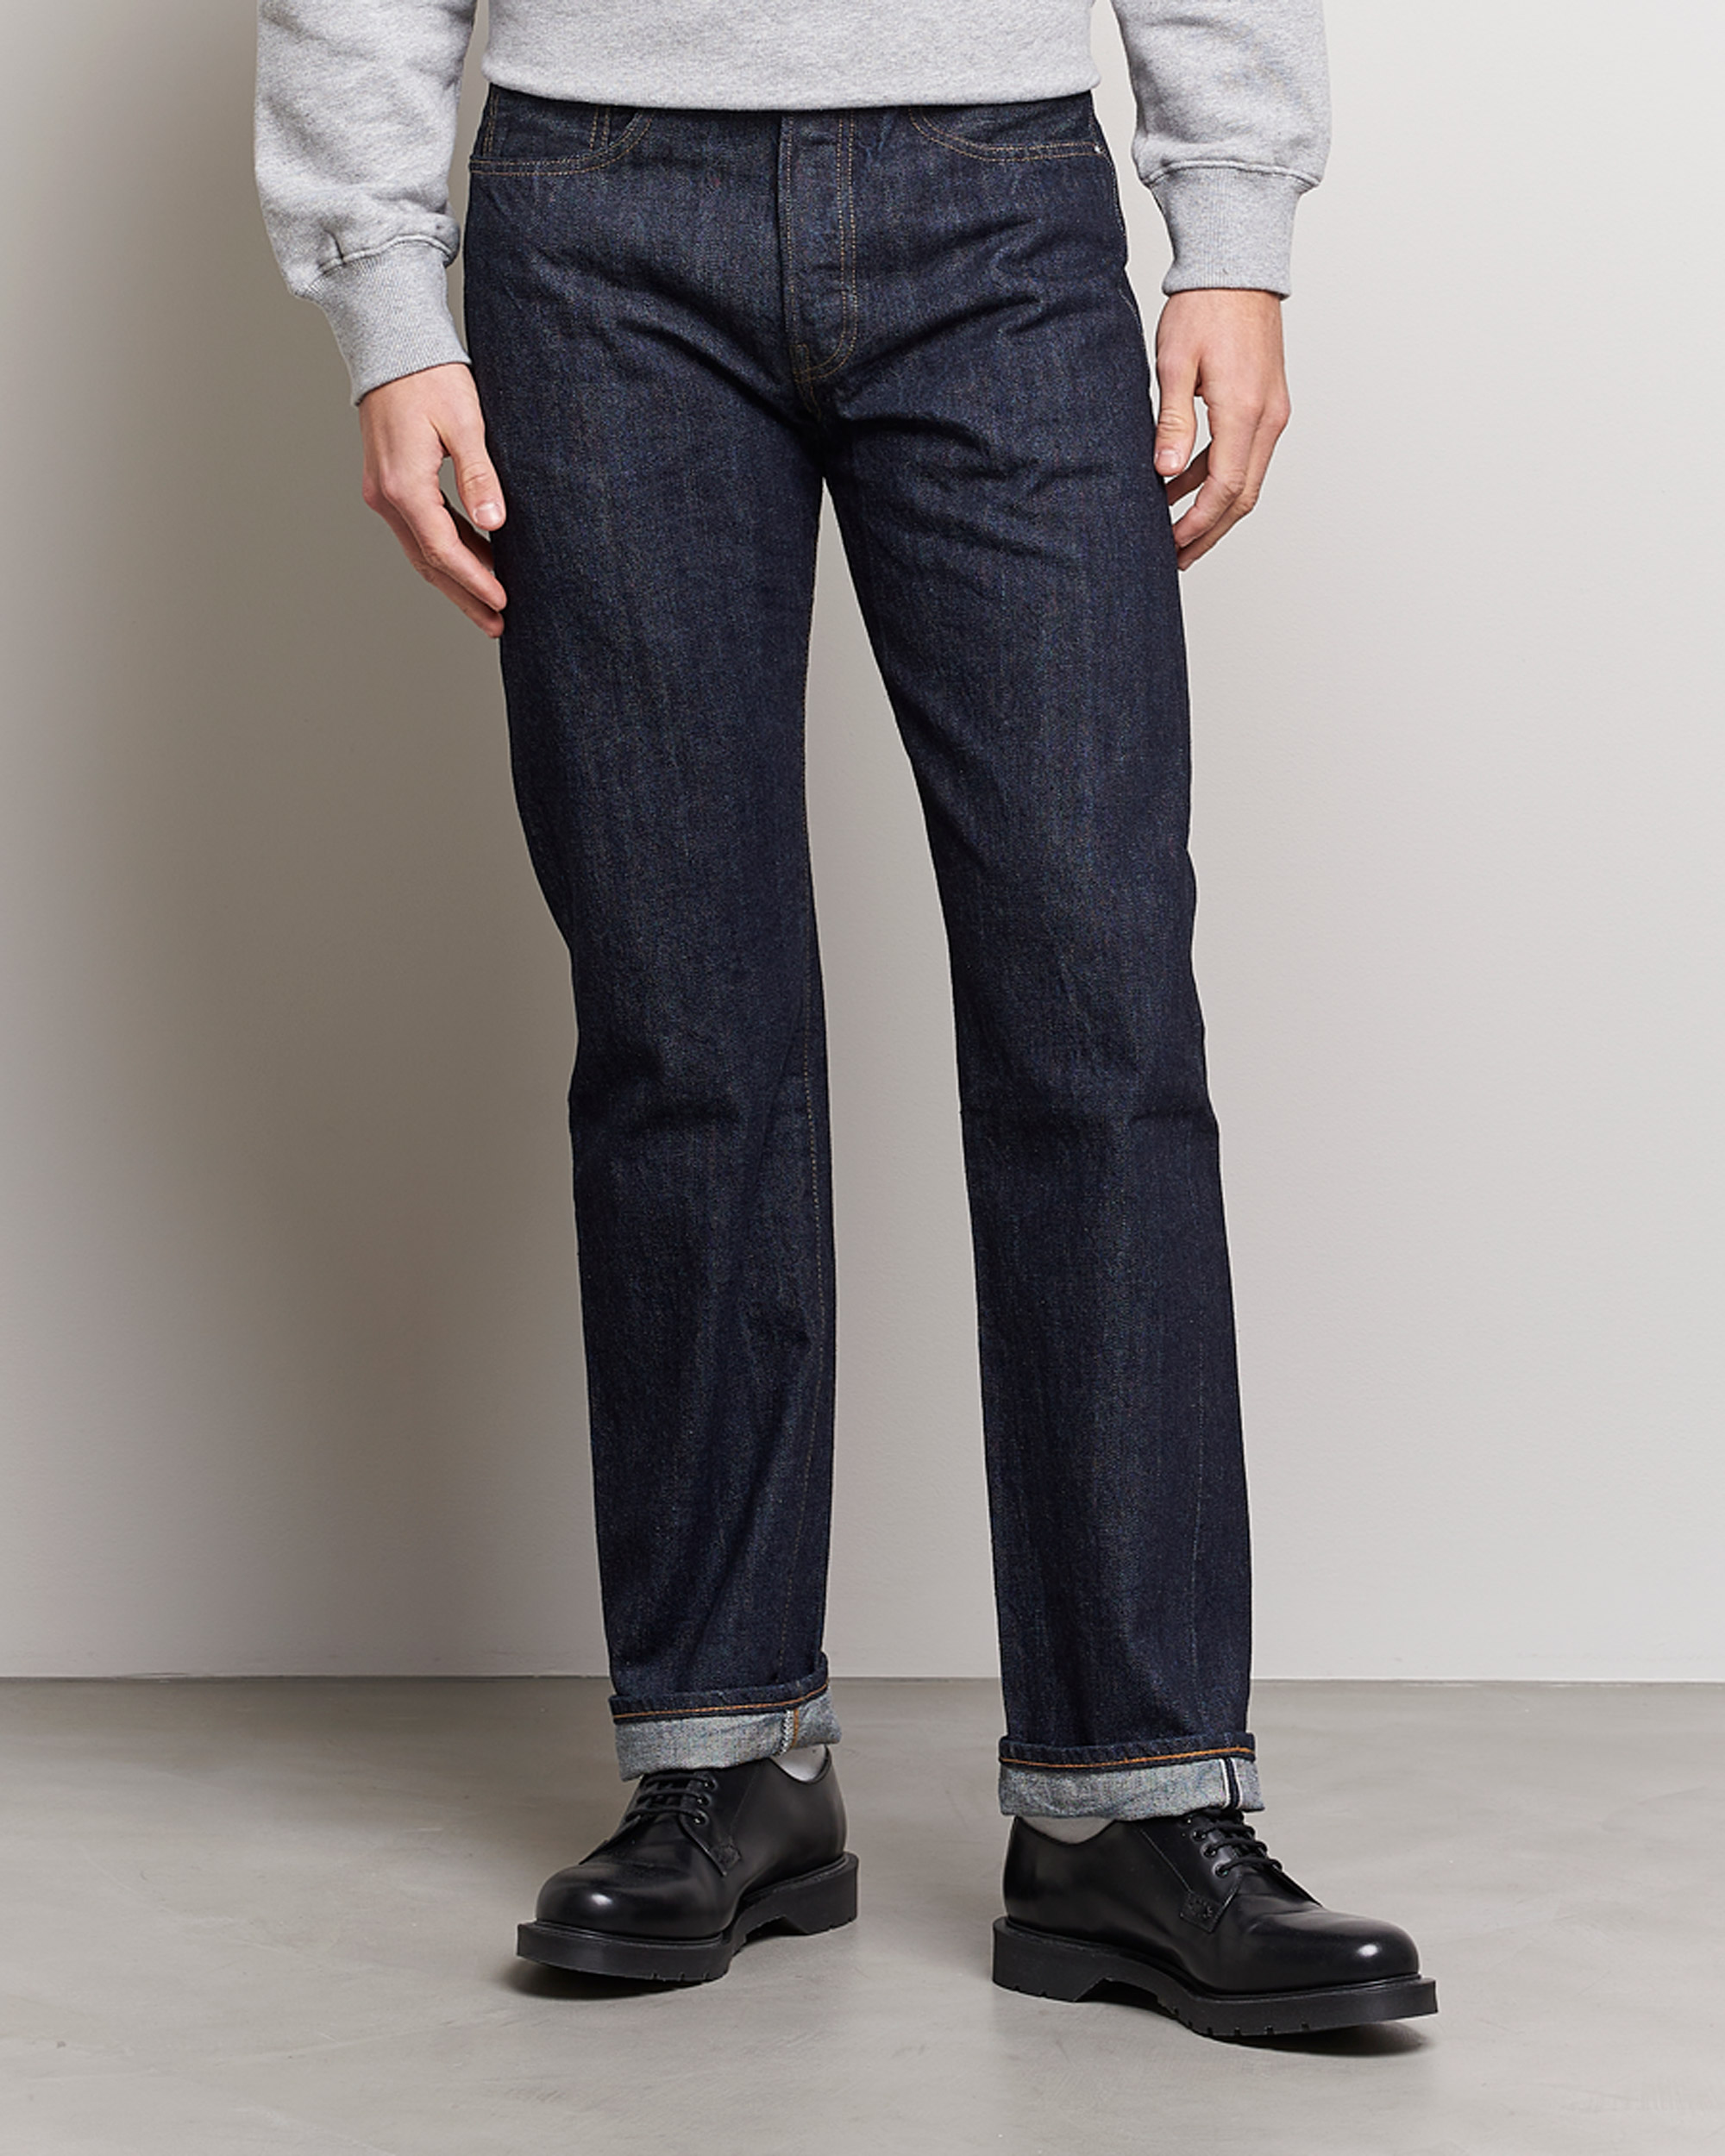 Levi's Vintage Clothing 1947 Straight Slim Fit 501 Selvedge Jeans